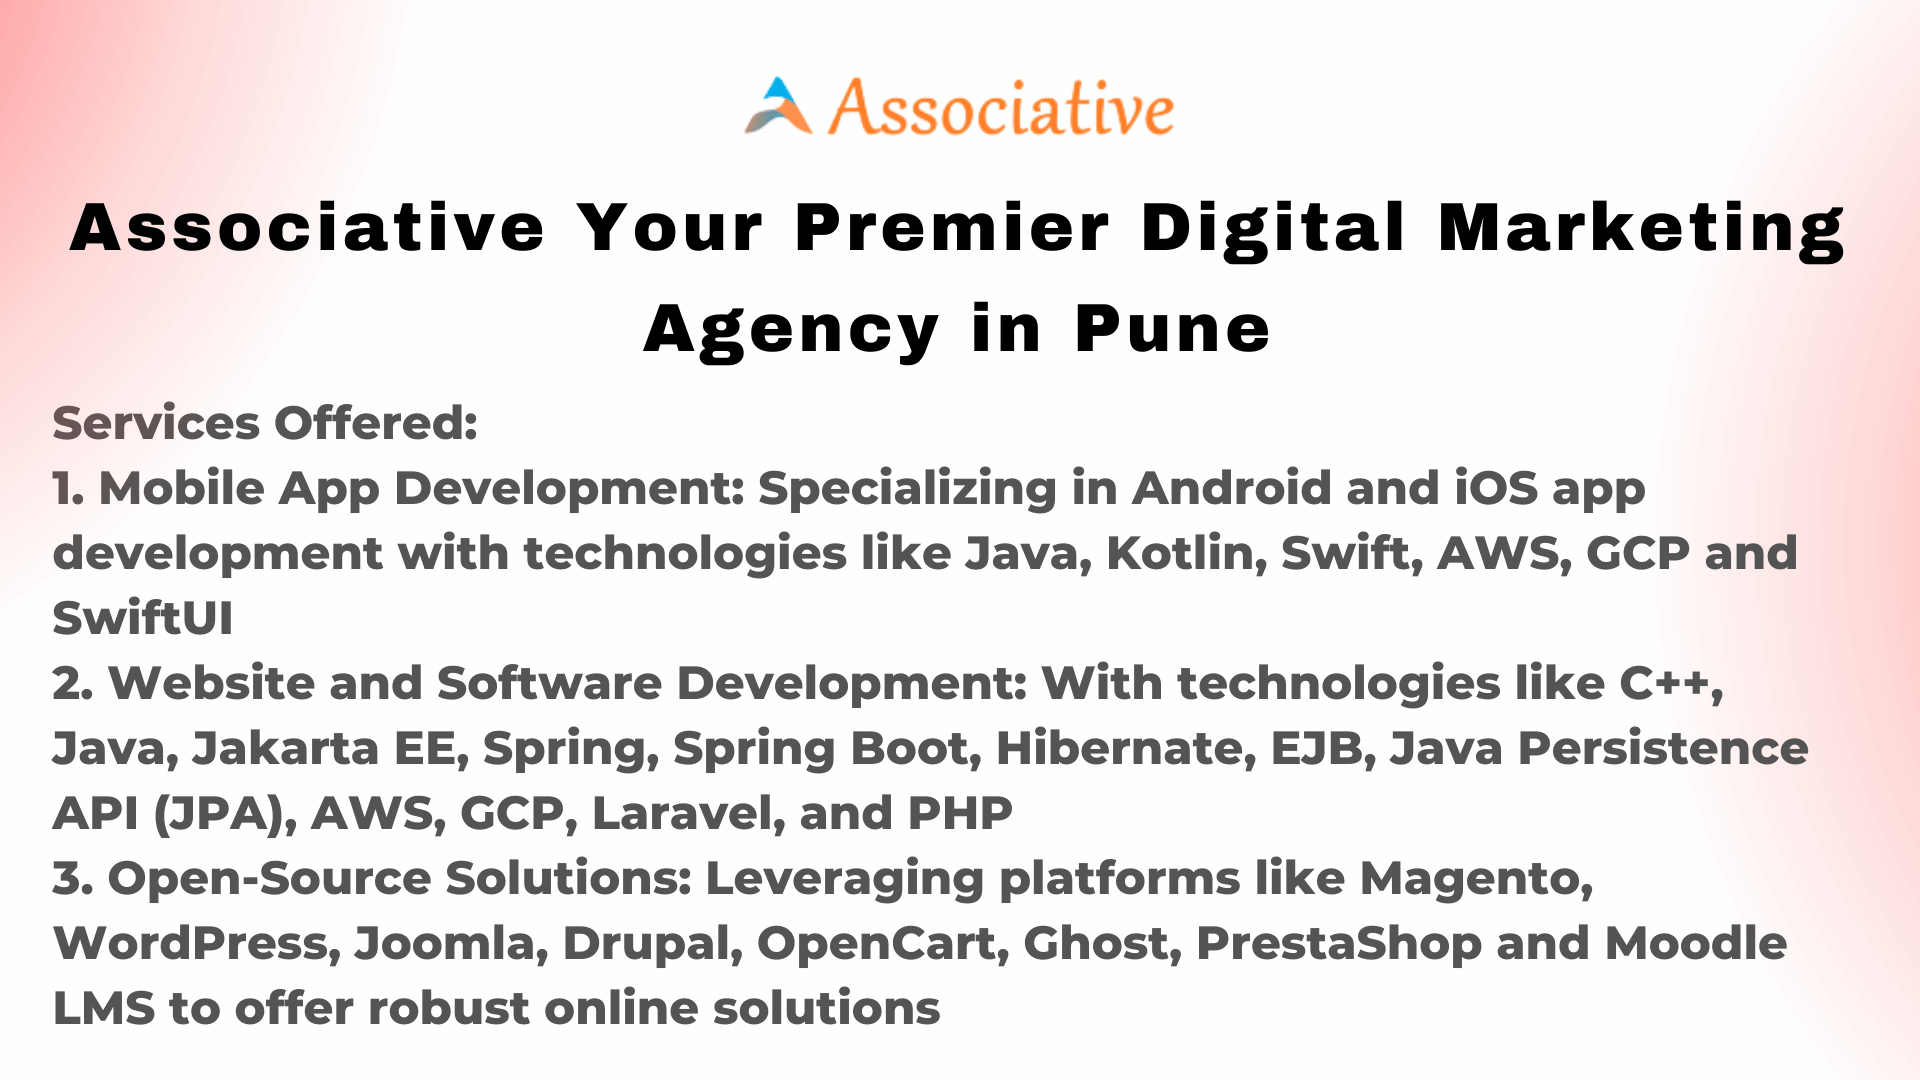 Associative Your Premier Digital Marketing Agency in Pune